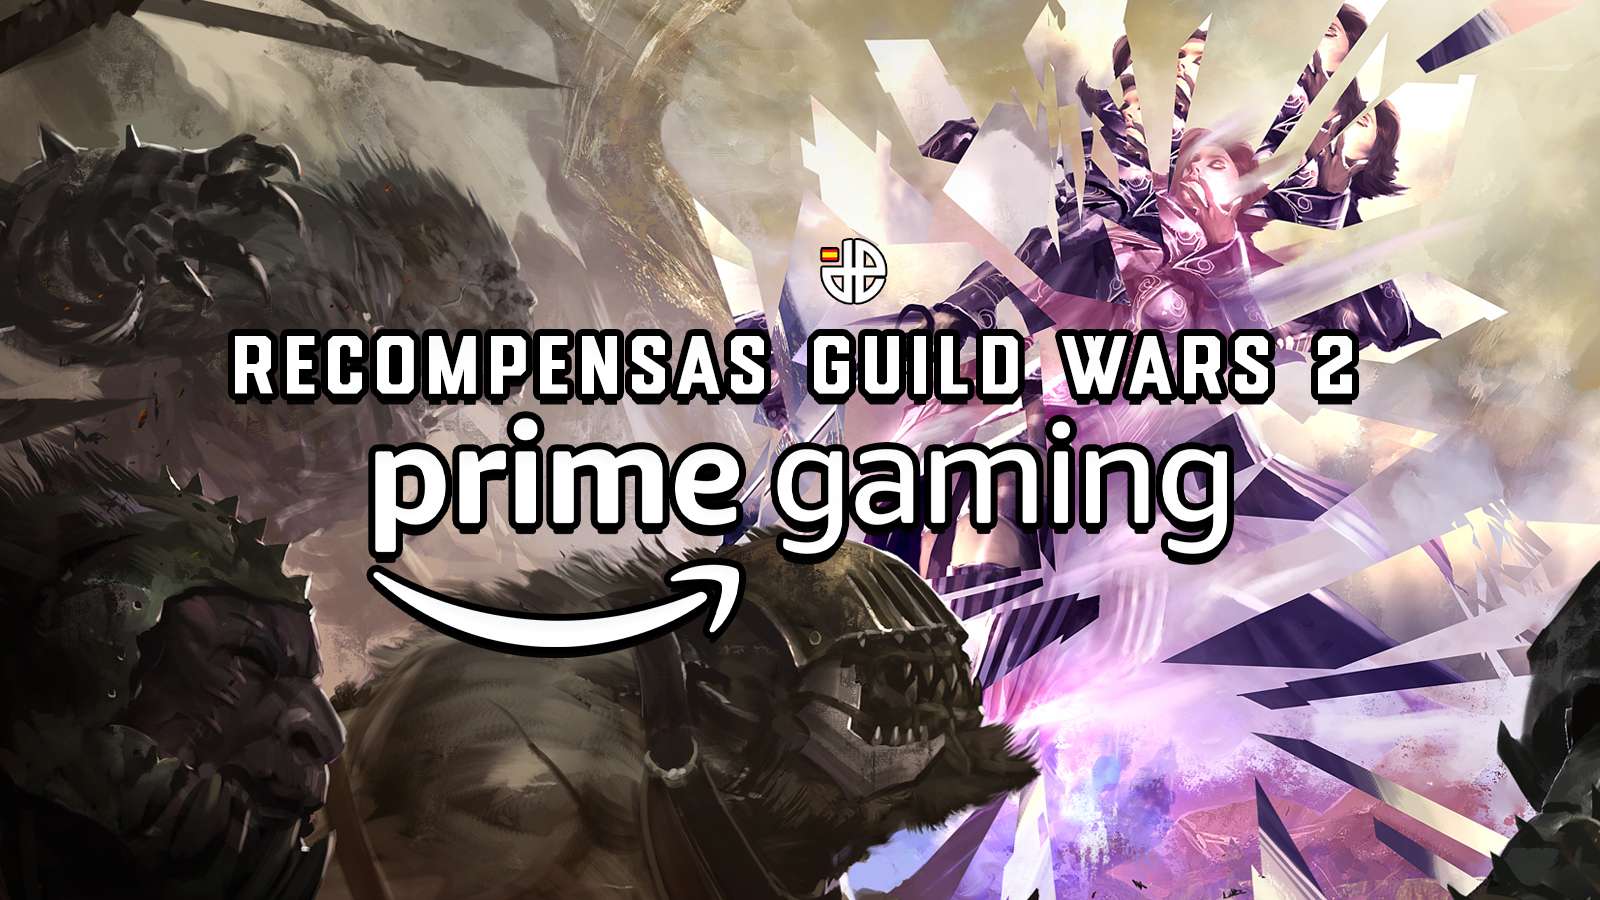 recompensas prime gaming guild wars 2